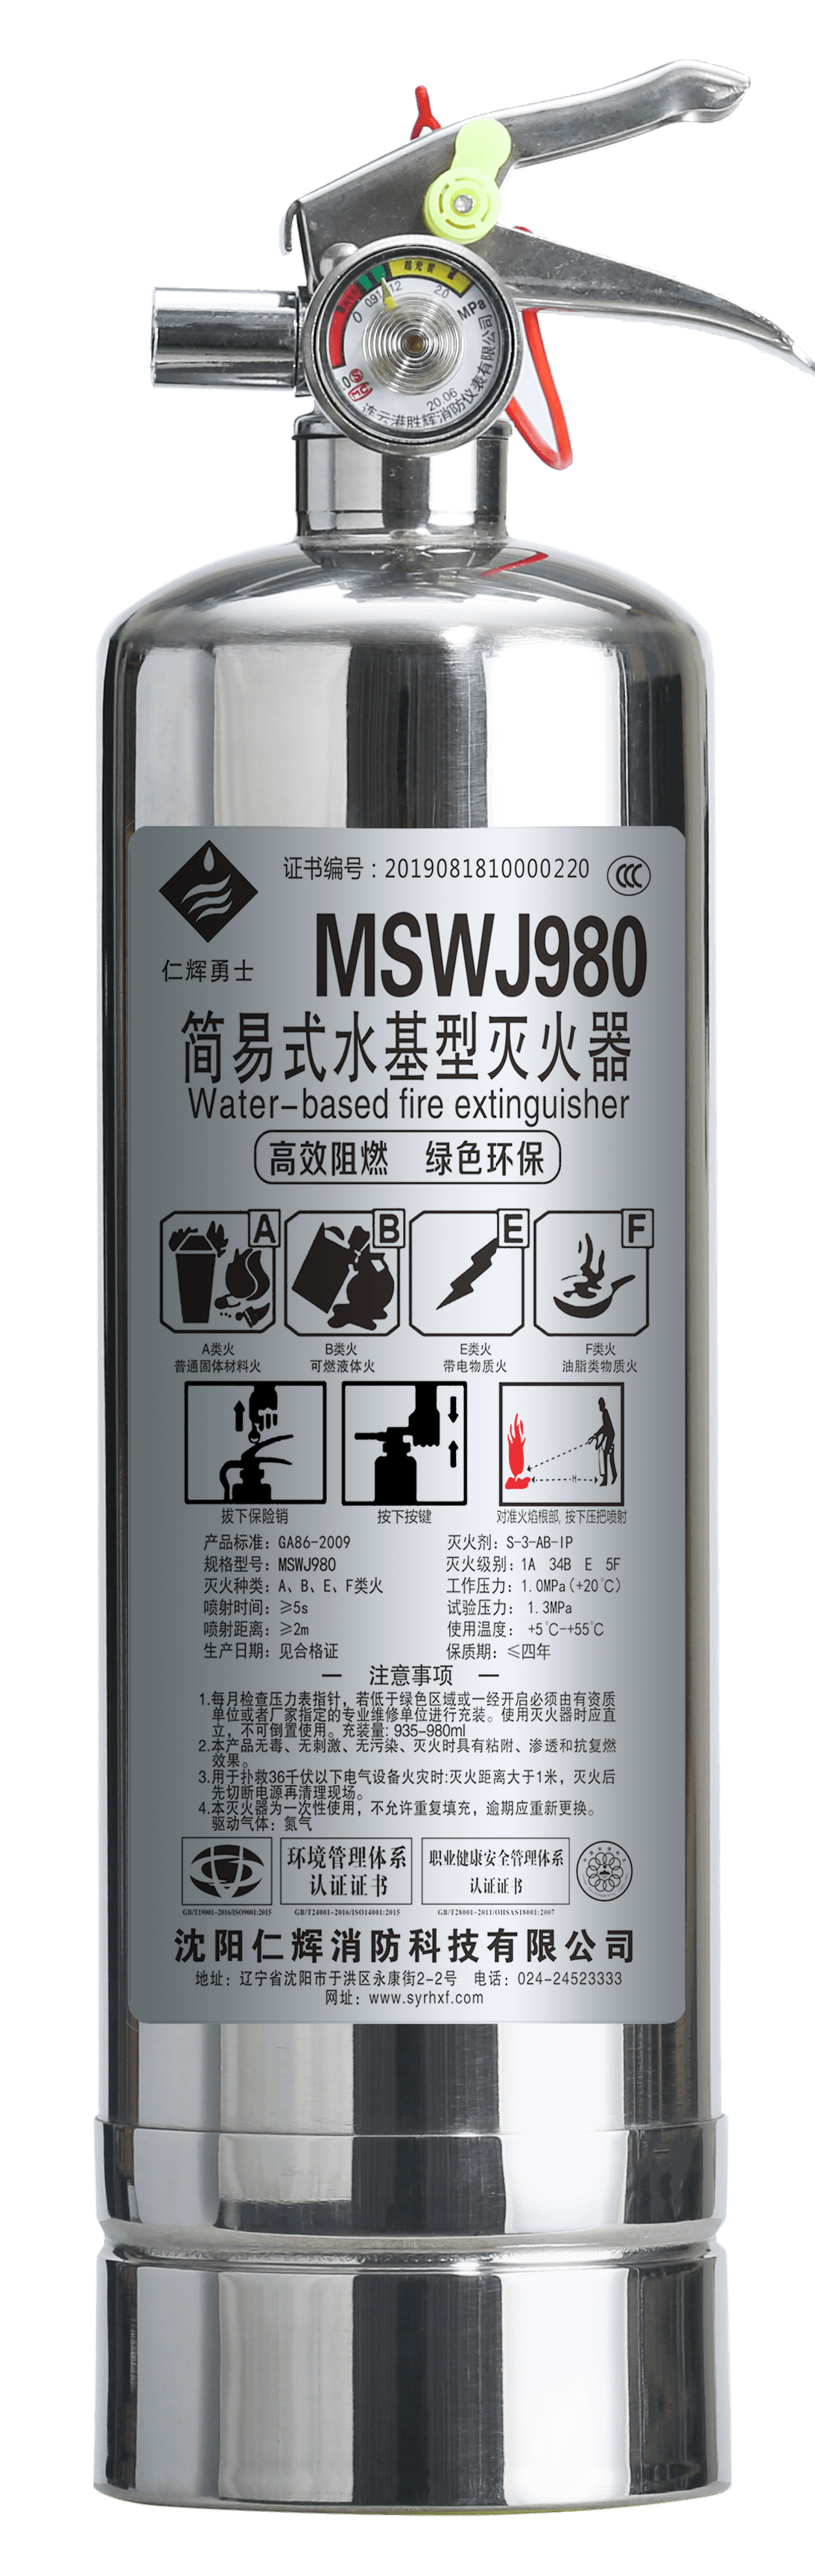 MSWJ980